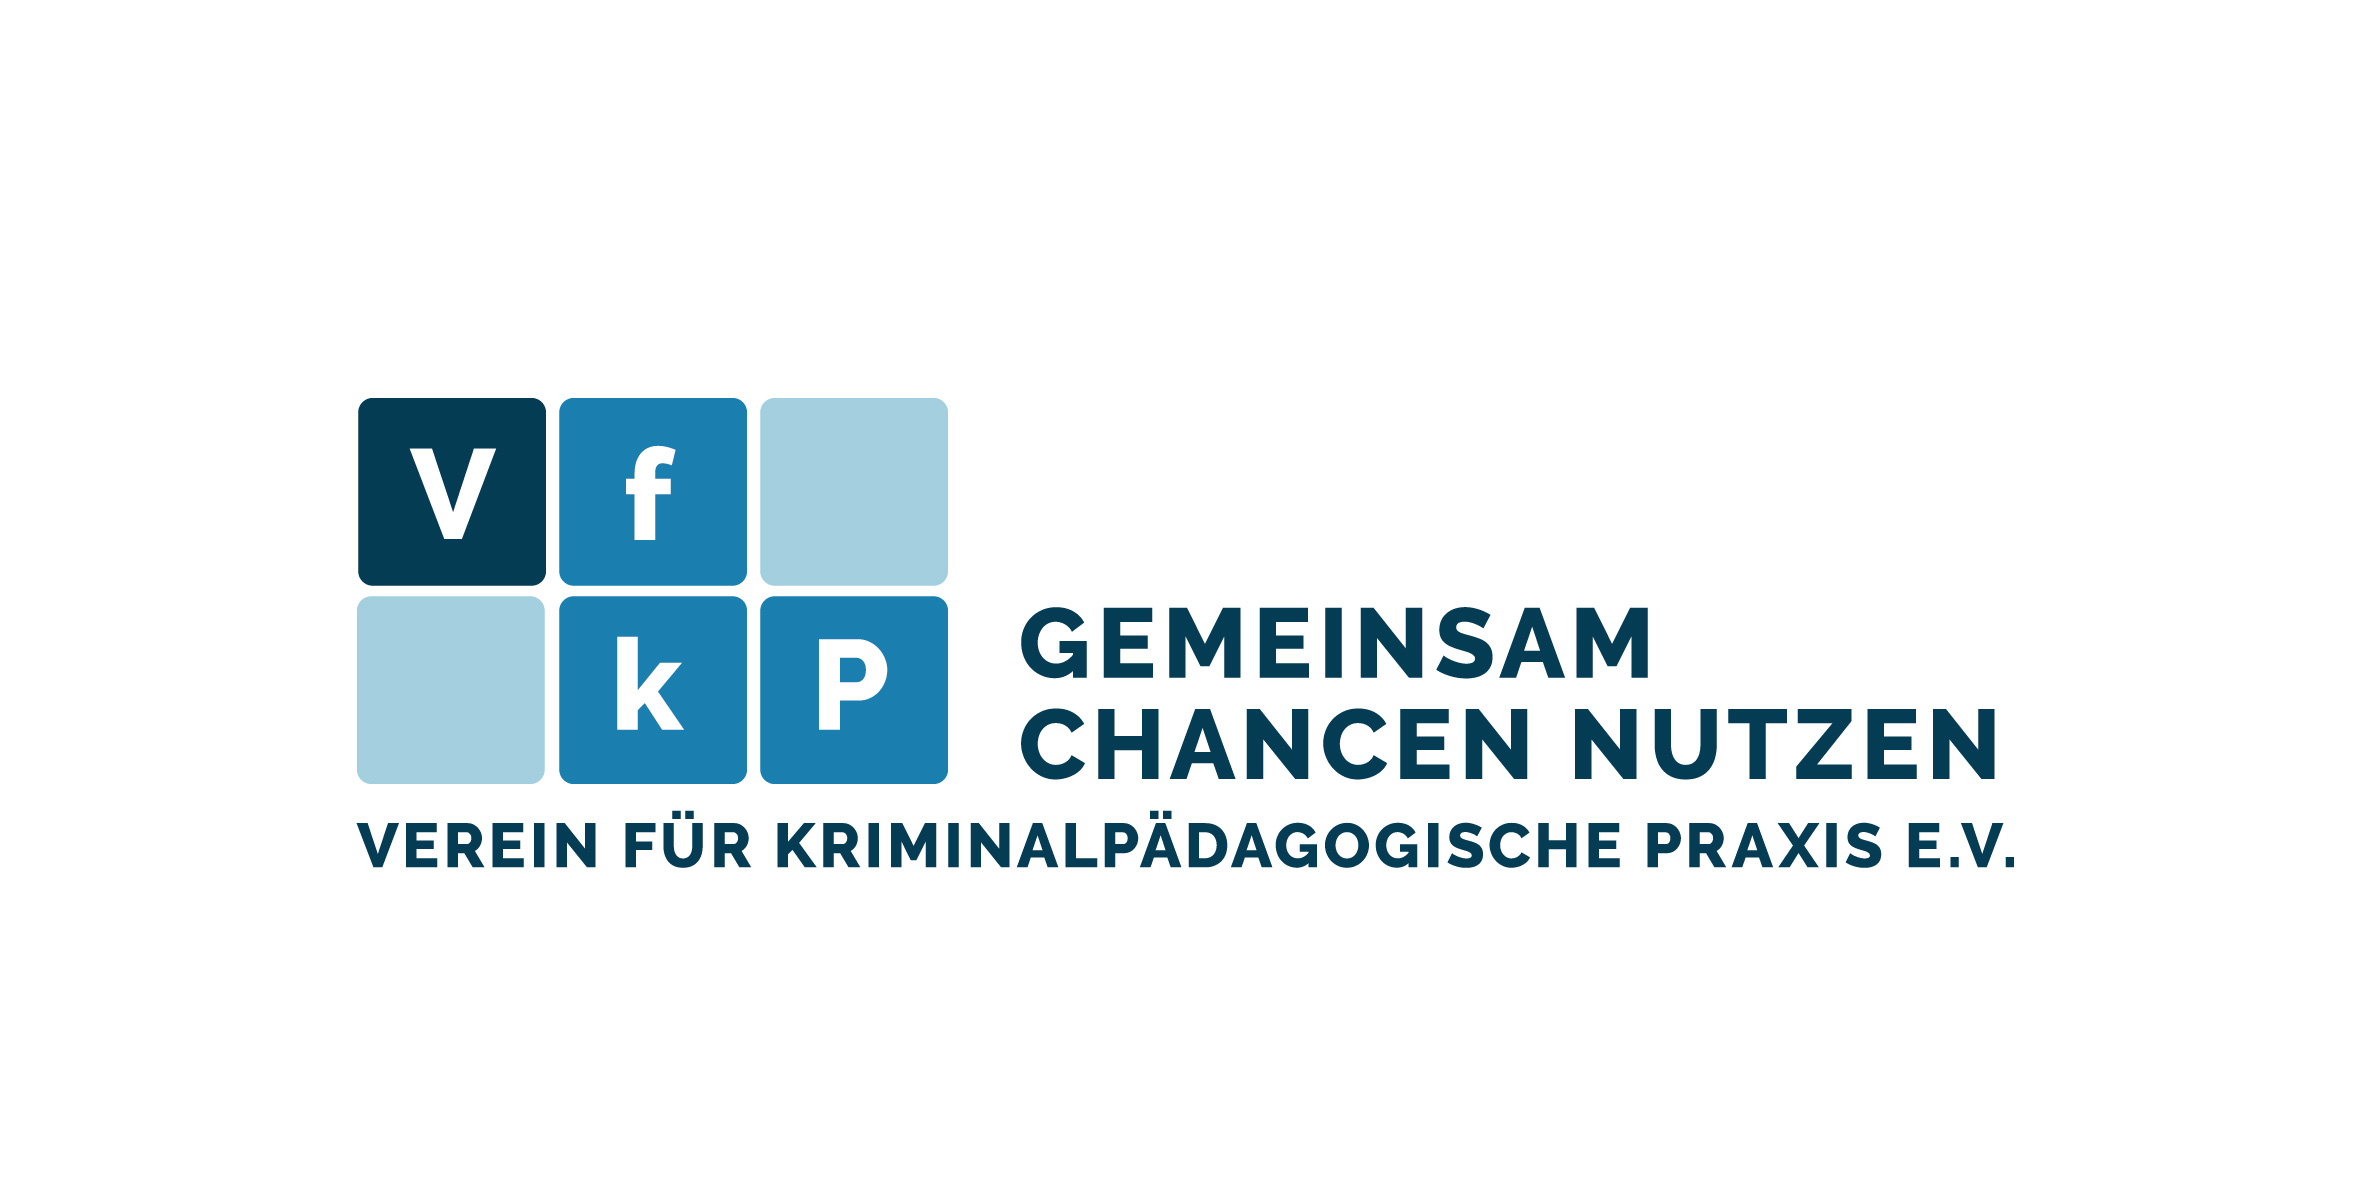 Logo Förderverein VfkP-Verein für kriminalpädagogische Praxis e.V.